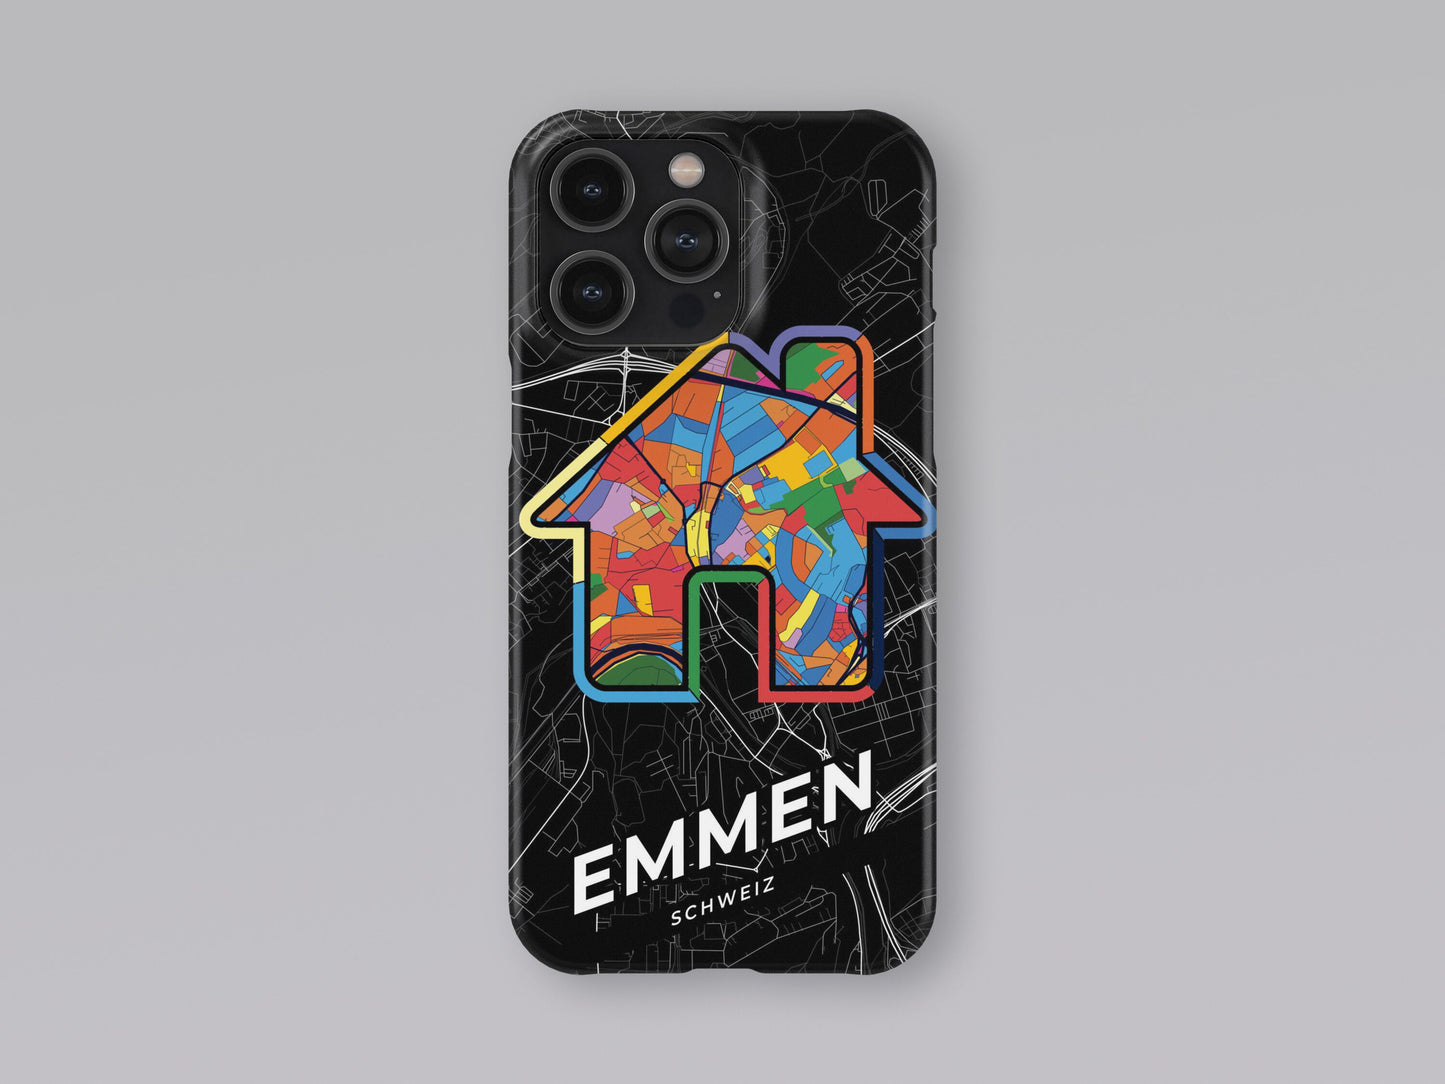 Emmen Switzerland slim phone case with colorful icon. Birthday, wedding or housewarming gift. Couple match cases. 3